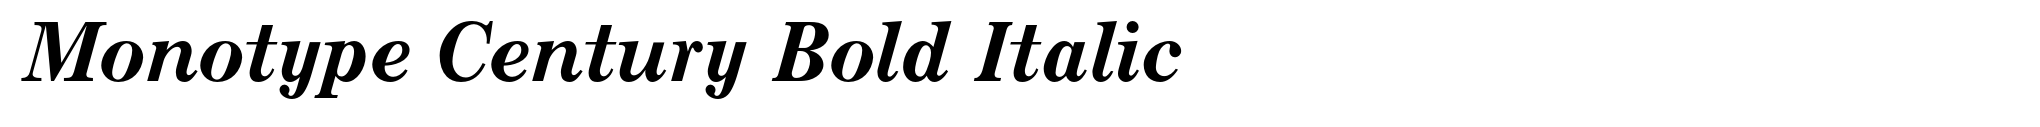 Monotype Century Bold Italic image